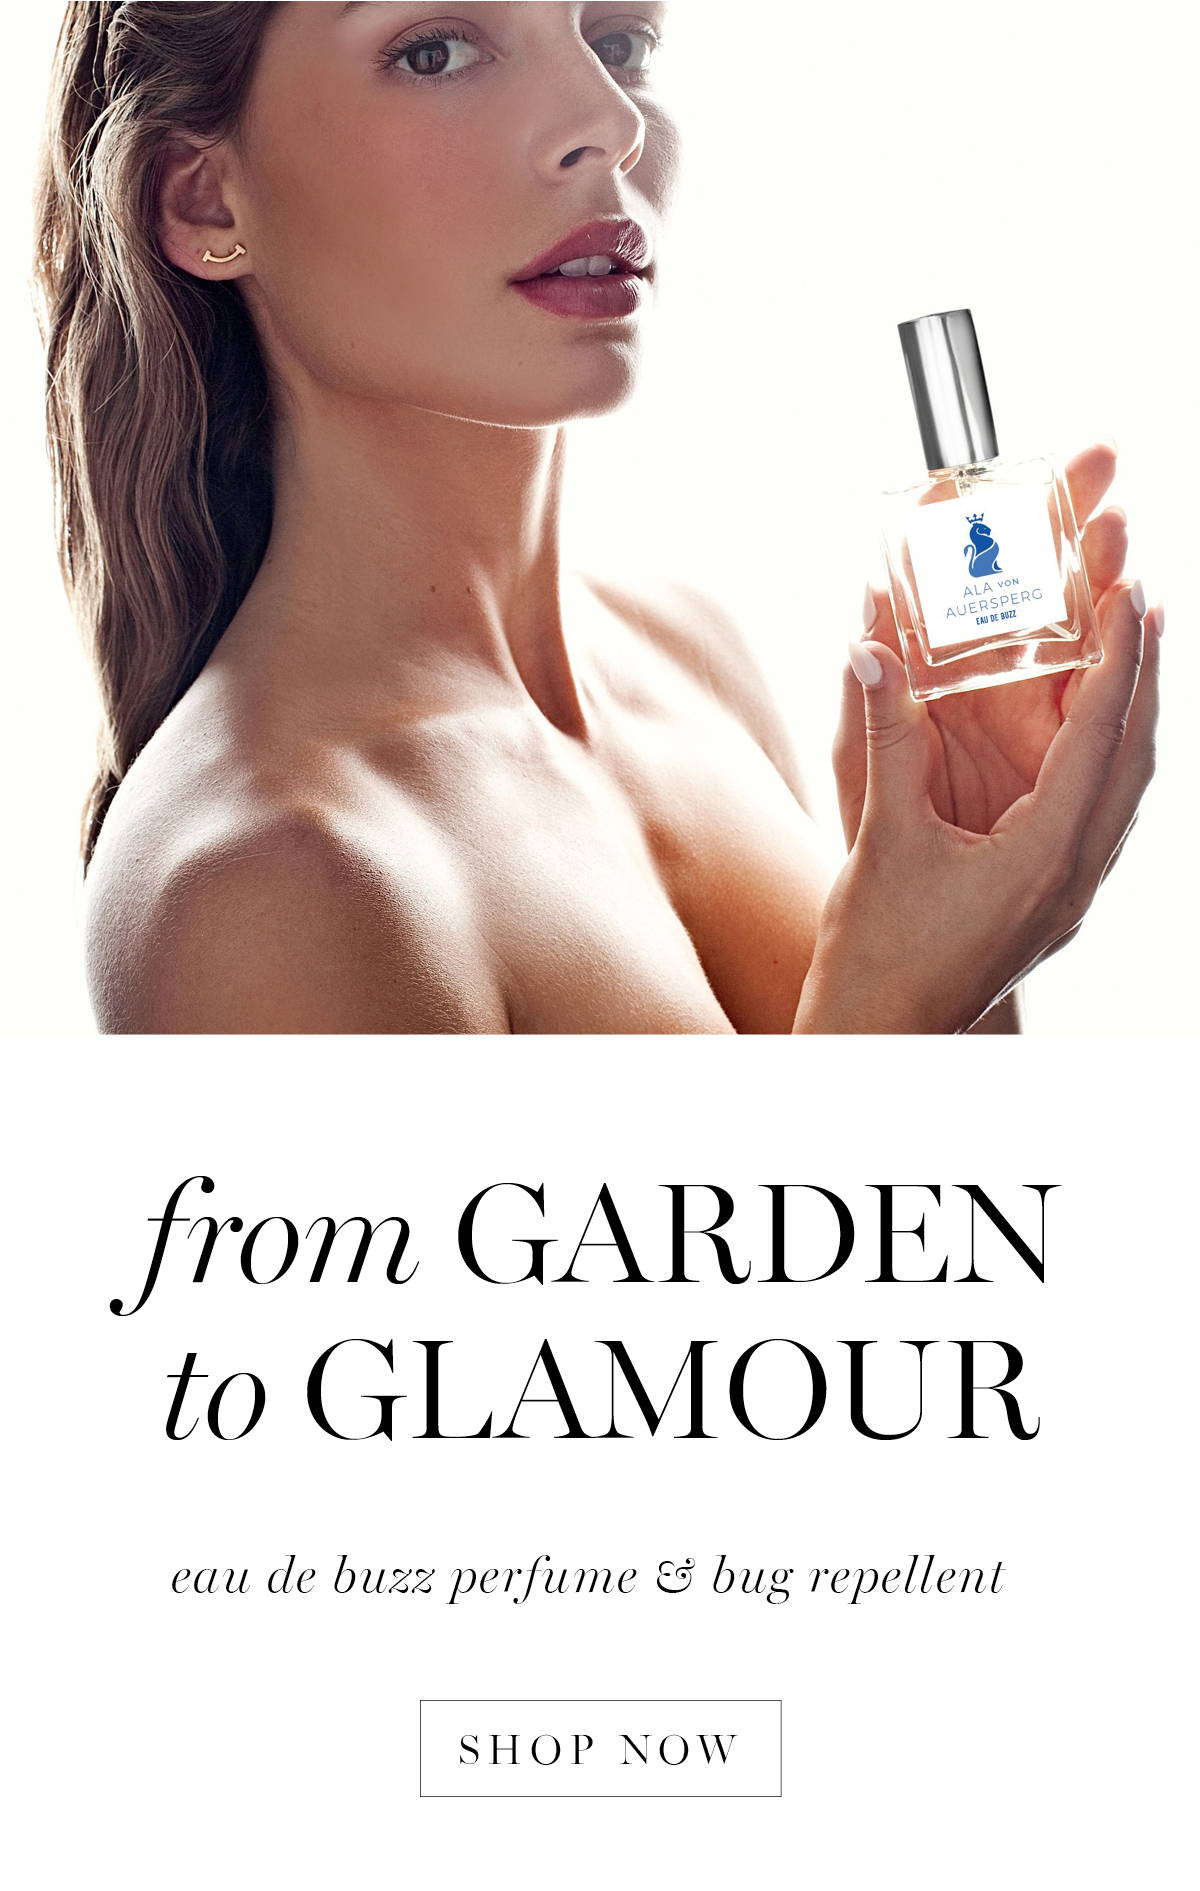 From Garden to Glamour | Eau de buzz perfume & bug repellent | Woman holding bug repellent perfume by The Buzz and Ala von Auersperg